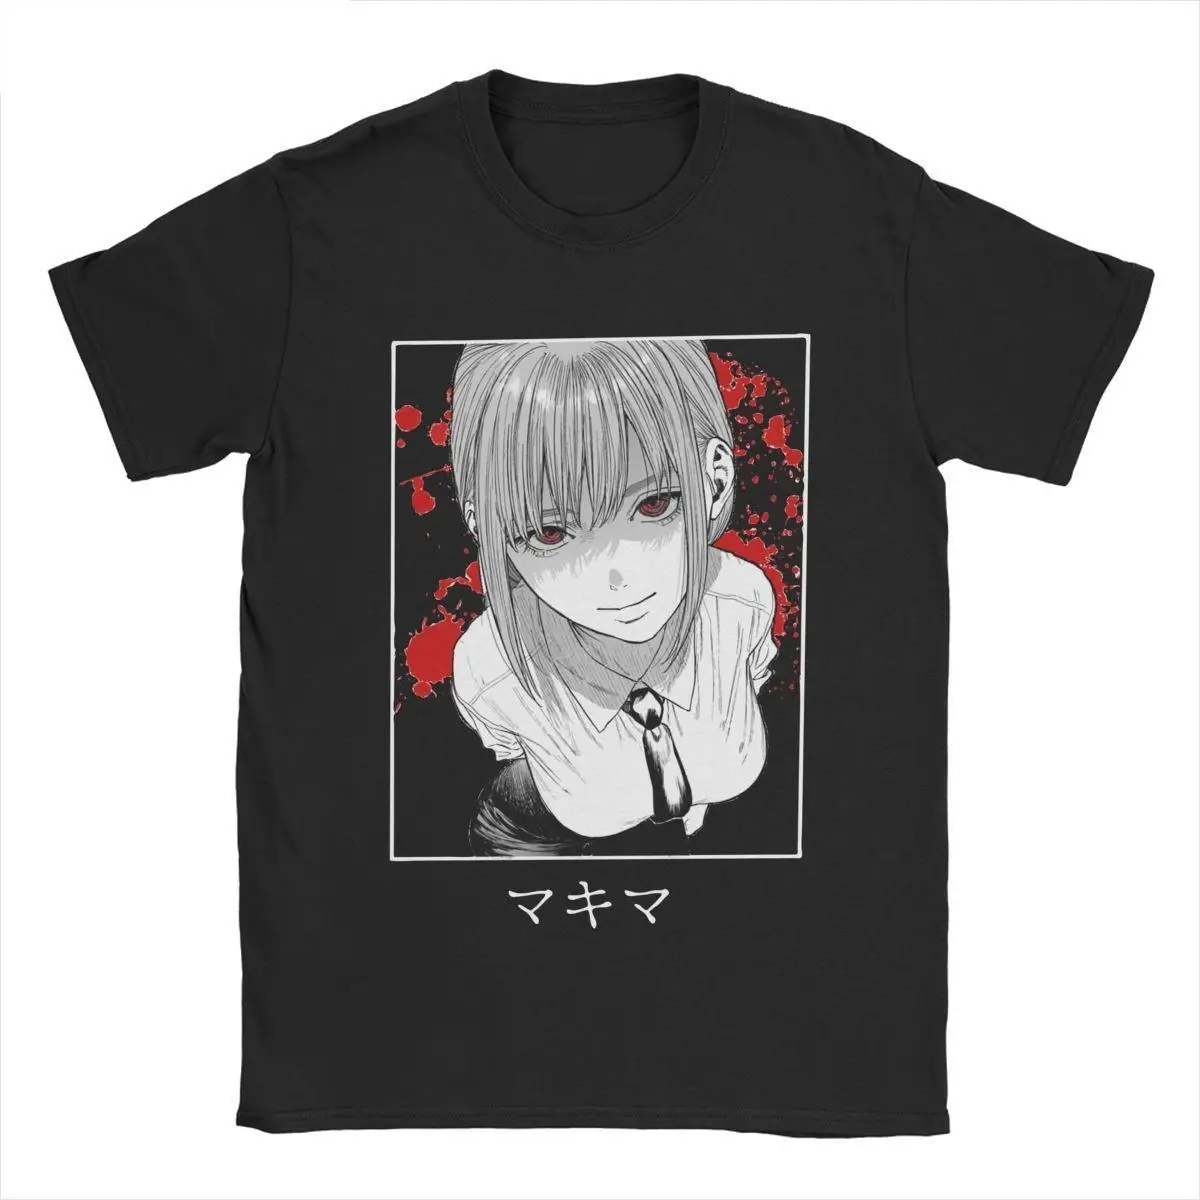 Chainsaw Man Makima Manga T Shirt for Men 100% Cotton Funny T-Shirt Crew Neck Tee Shirt Short Sleeve Tops New Arrival